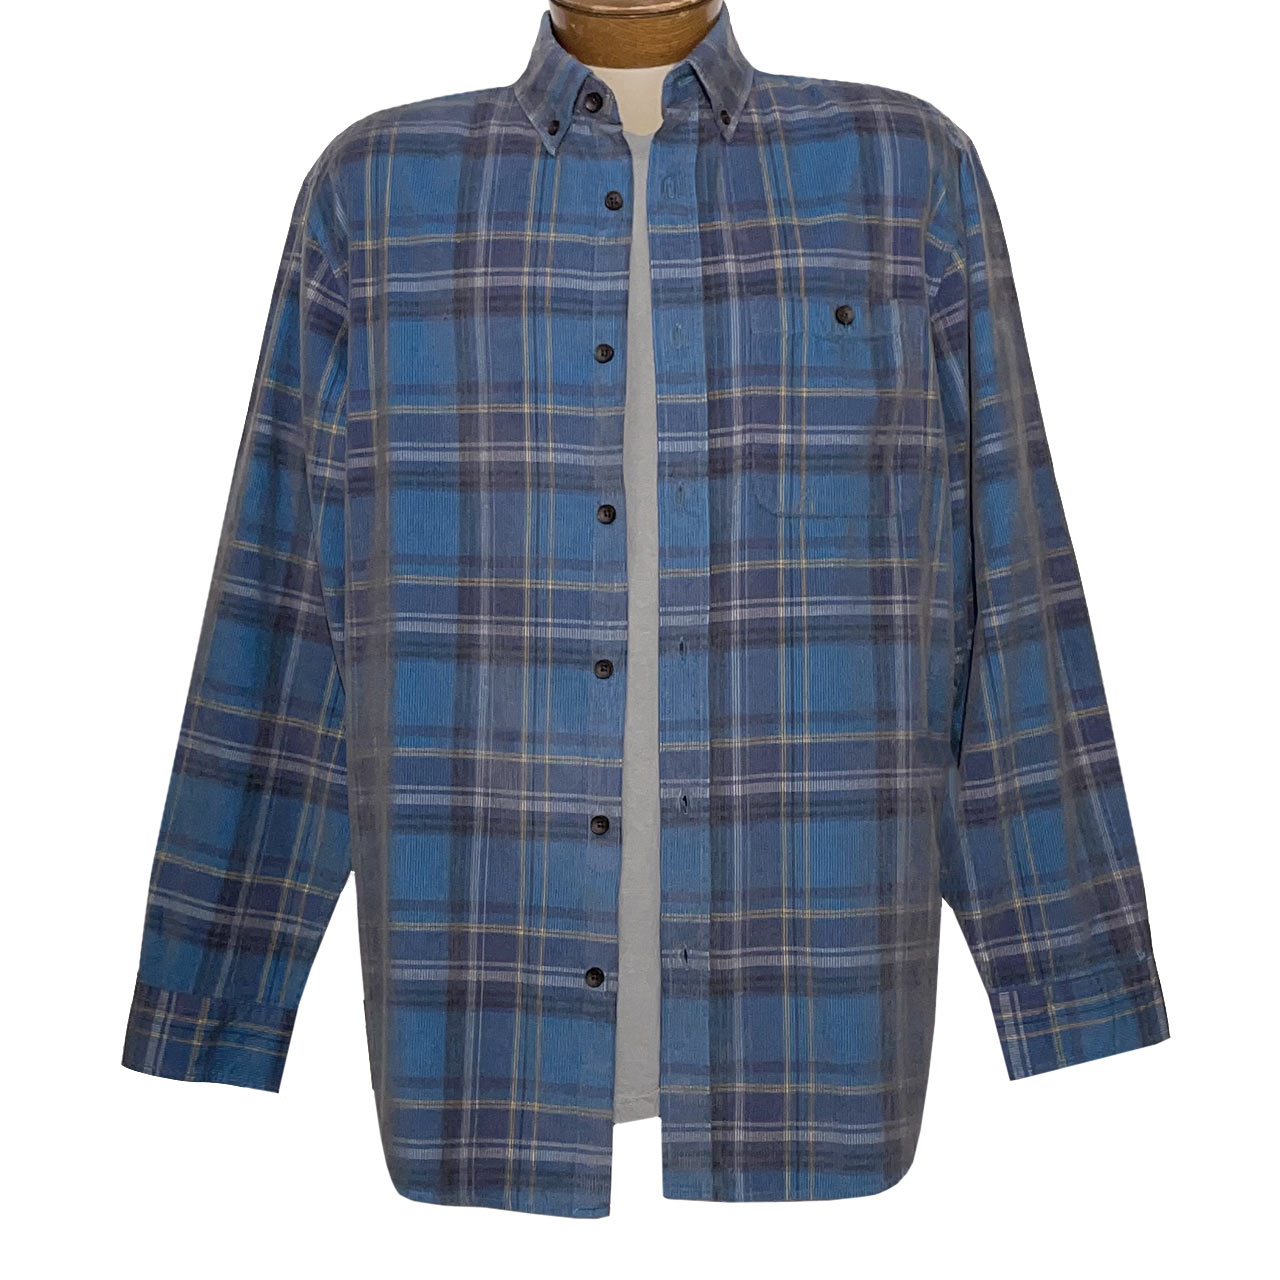 Men's R. Options Corduroy Long Sleeve Yarn Dyed Plaid Sport Shirt, #82241-3B Blue/Navy